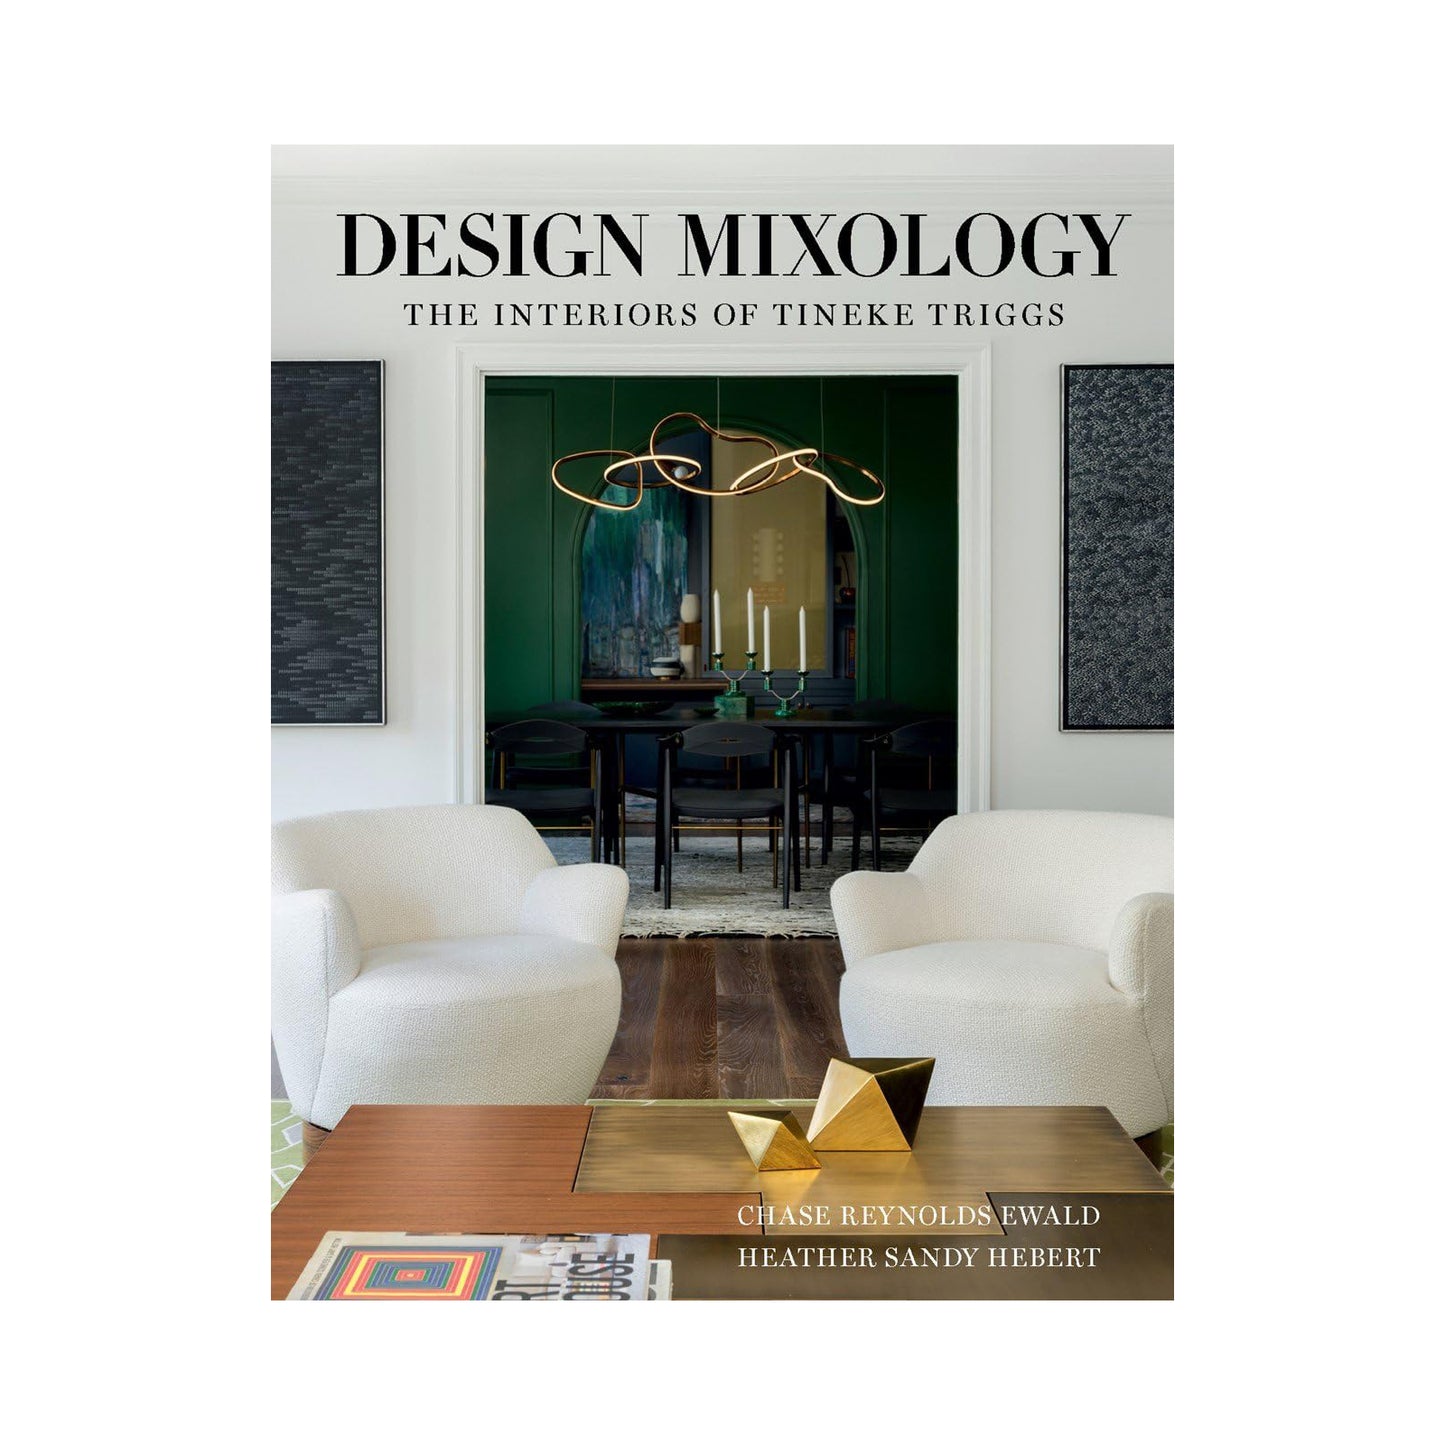 Design Mixology: The Interiors of Tineke Triggs